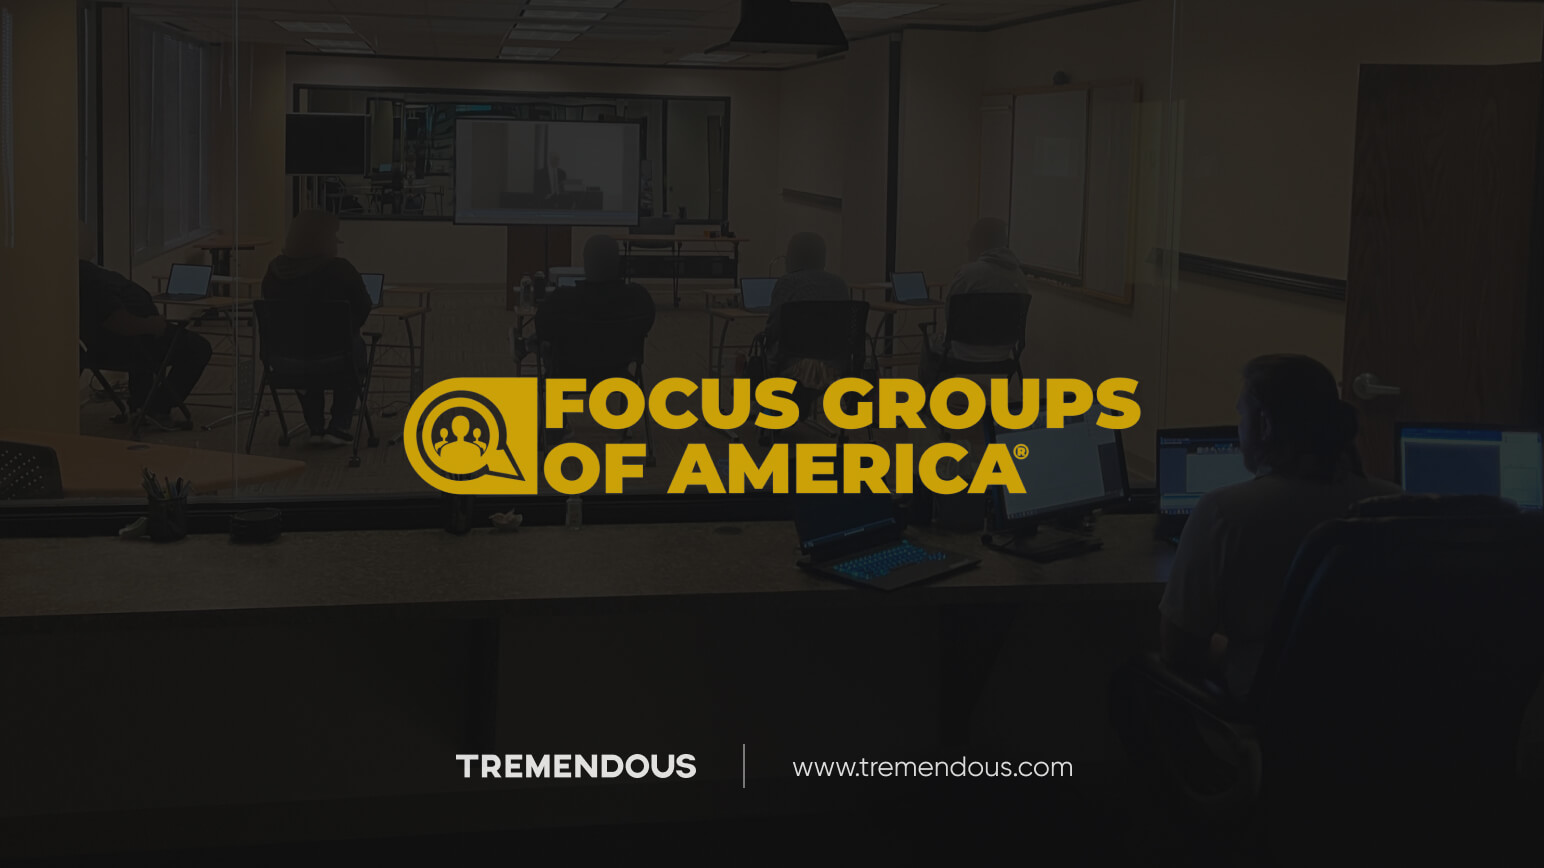 The Focus Groups of America logo.